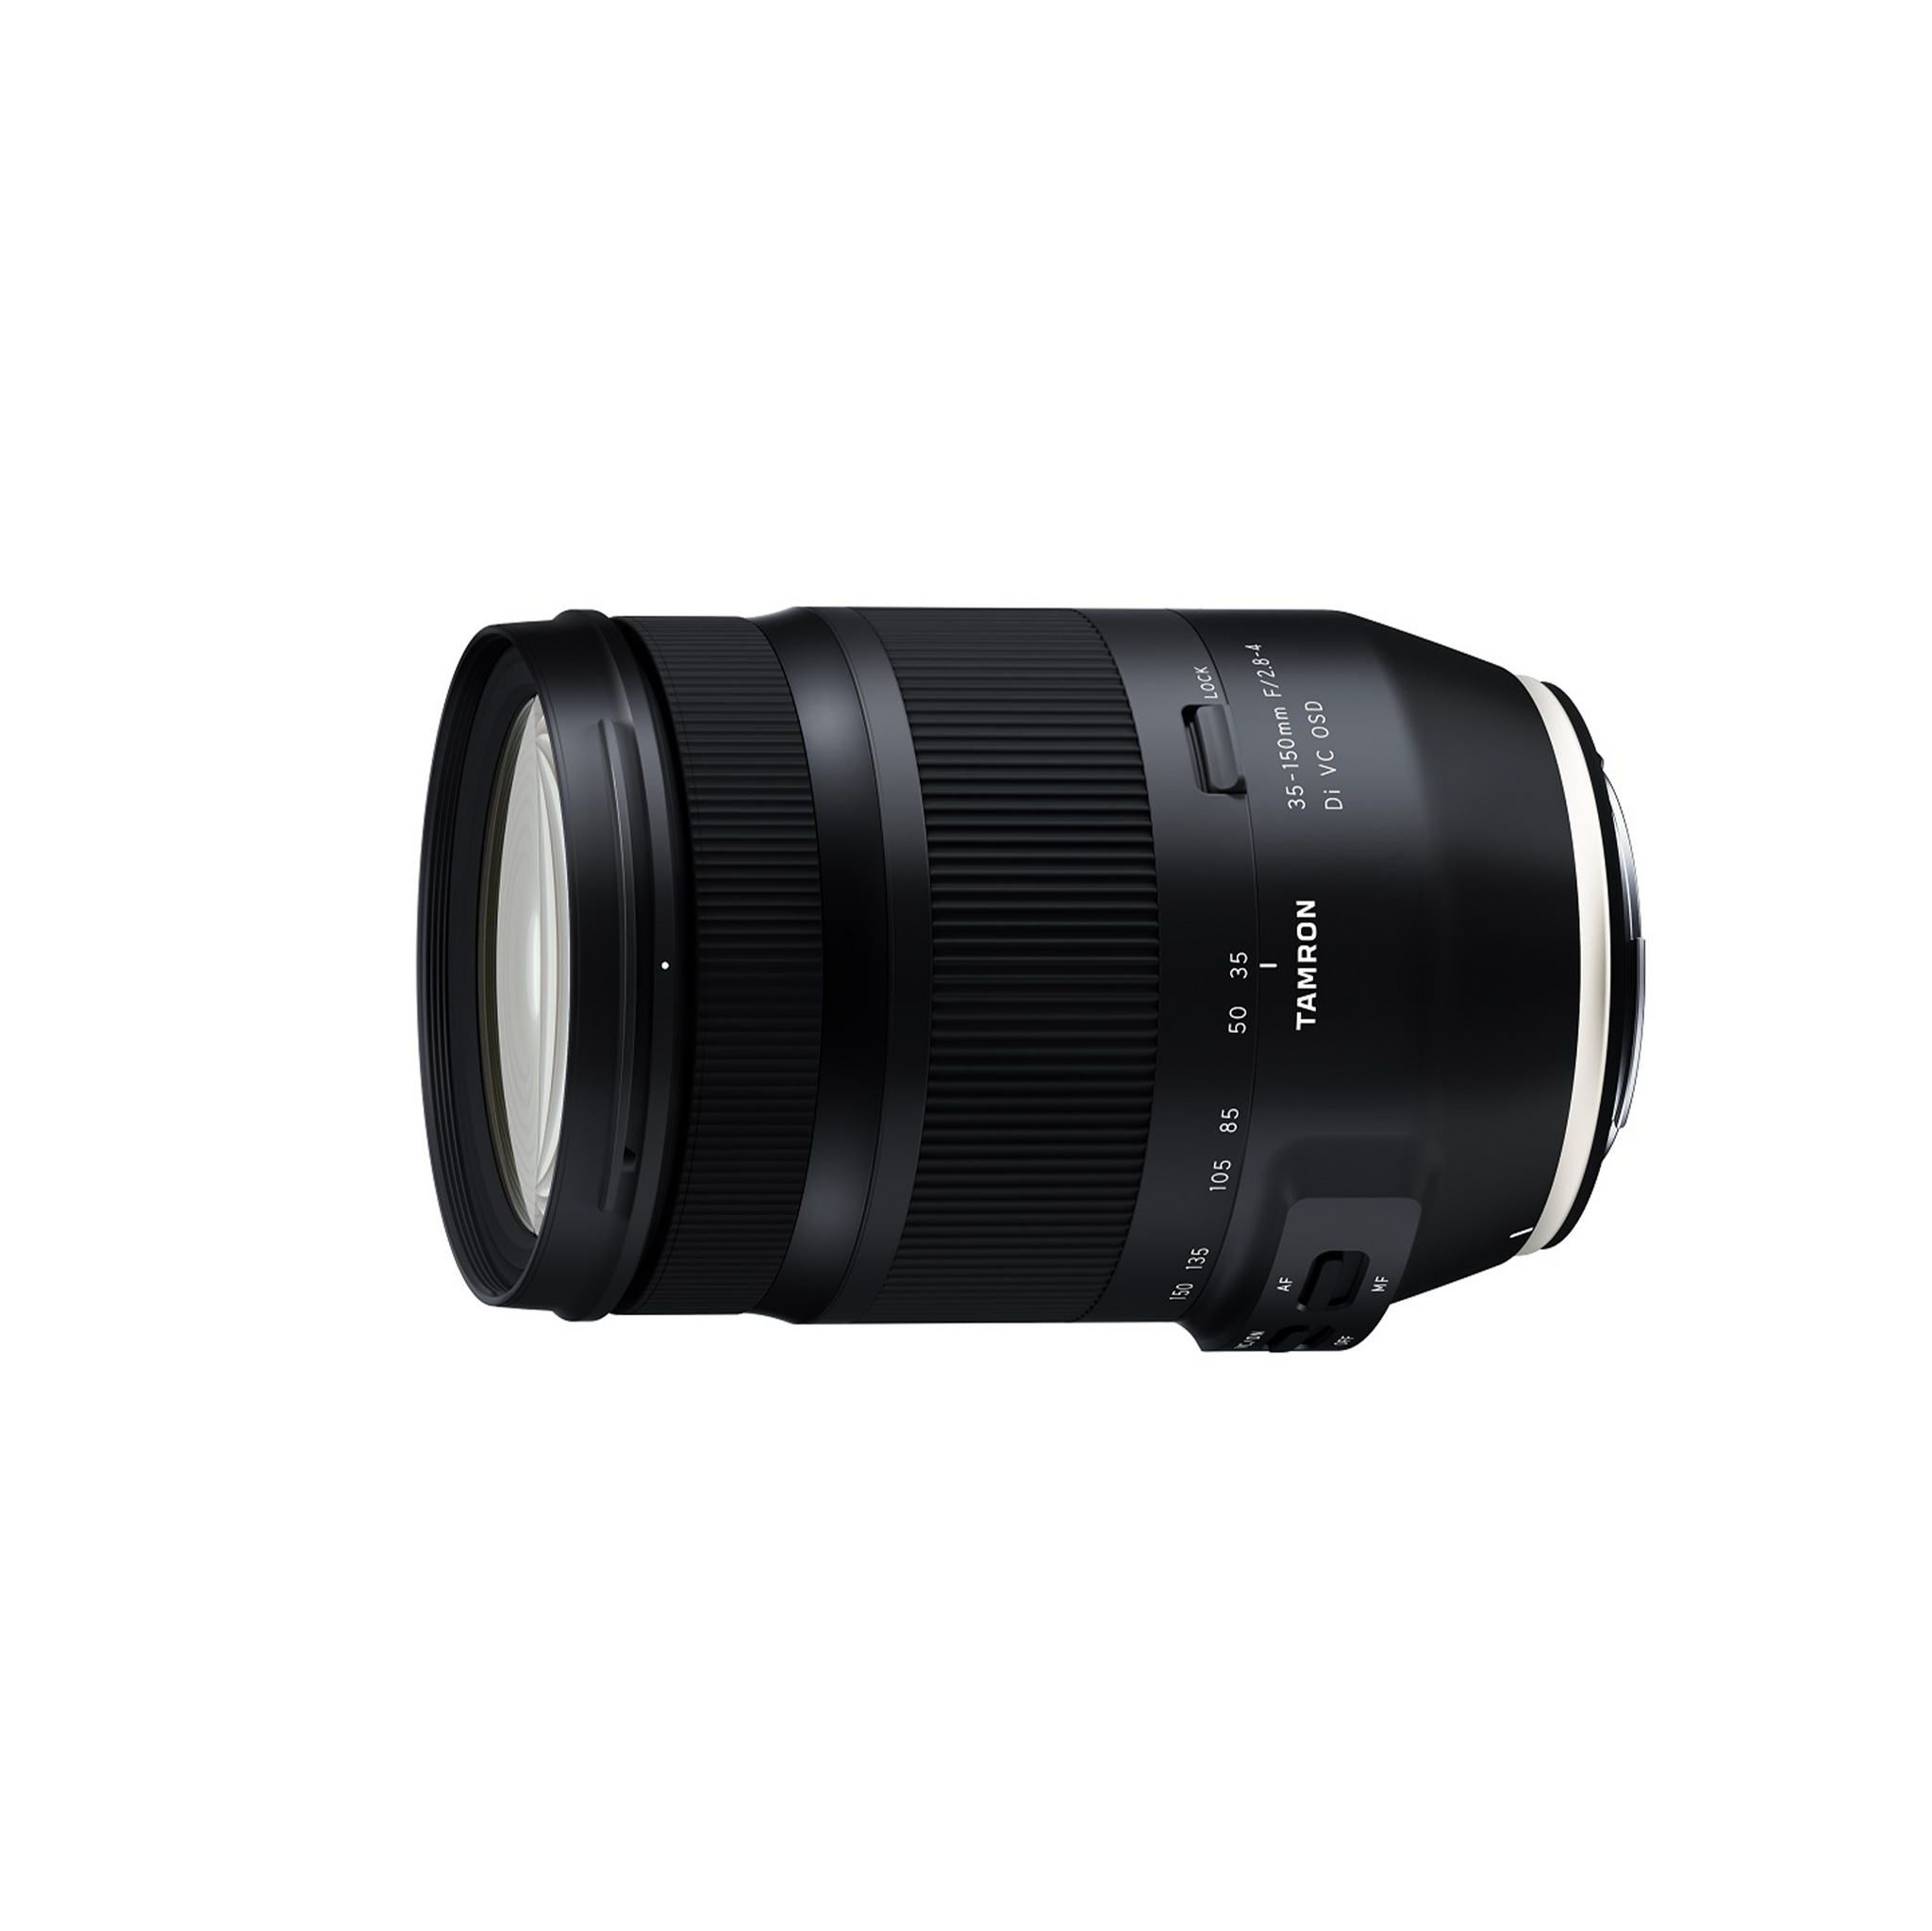 Tamron 35-150mm F/2.8-4 Di VC OSD Lens (A043) (For Nikon/Canon)-Camera Lenses-futuromic